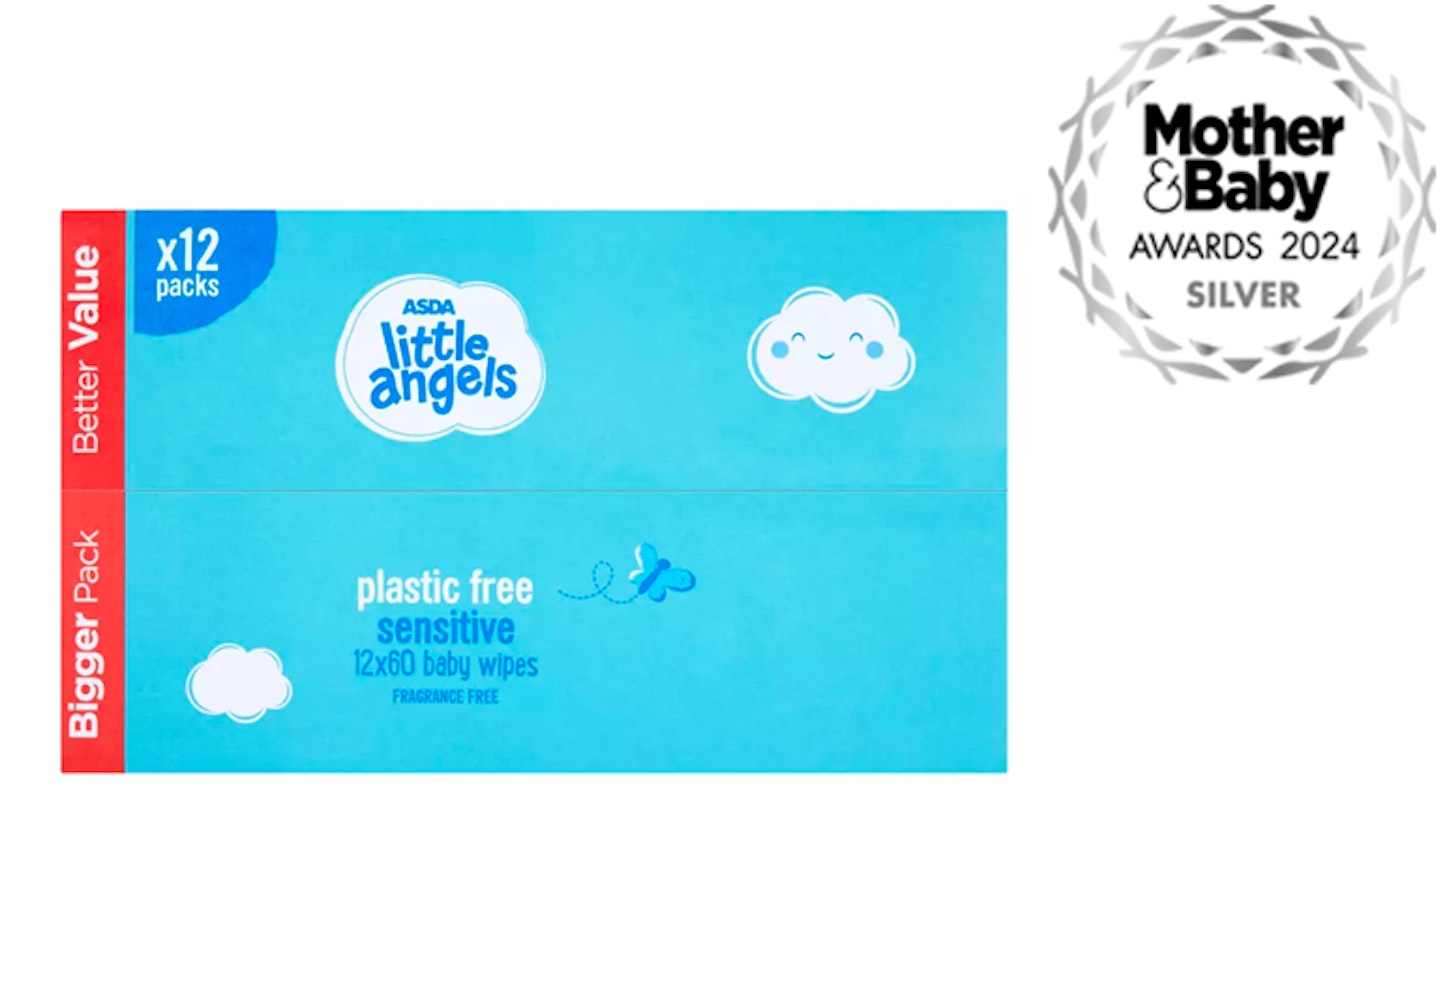 ASDA Little Angels Plastic Free Sensitive 60 Baby Wipes